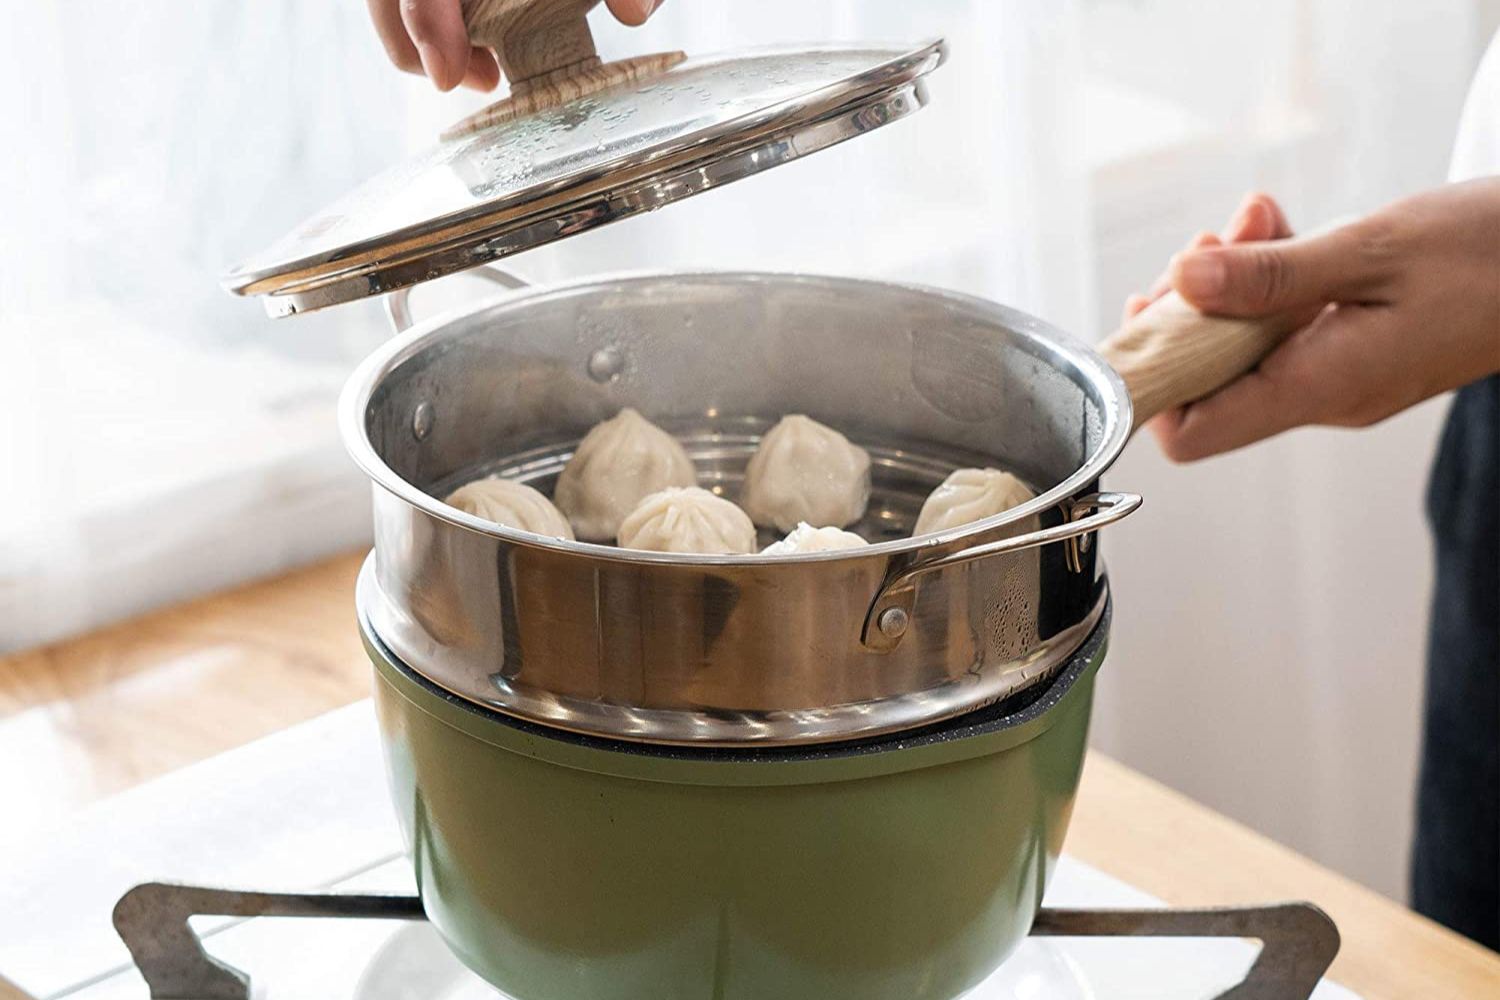 The Always Pan Dupe Option: Rockurwok 2.5-Quart Nonstick Saucepan with Steamer